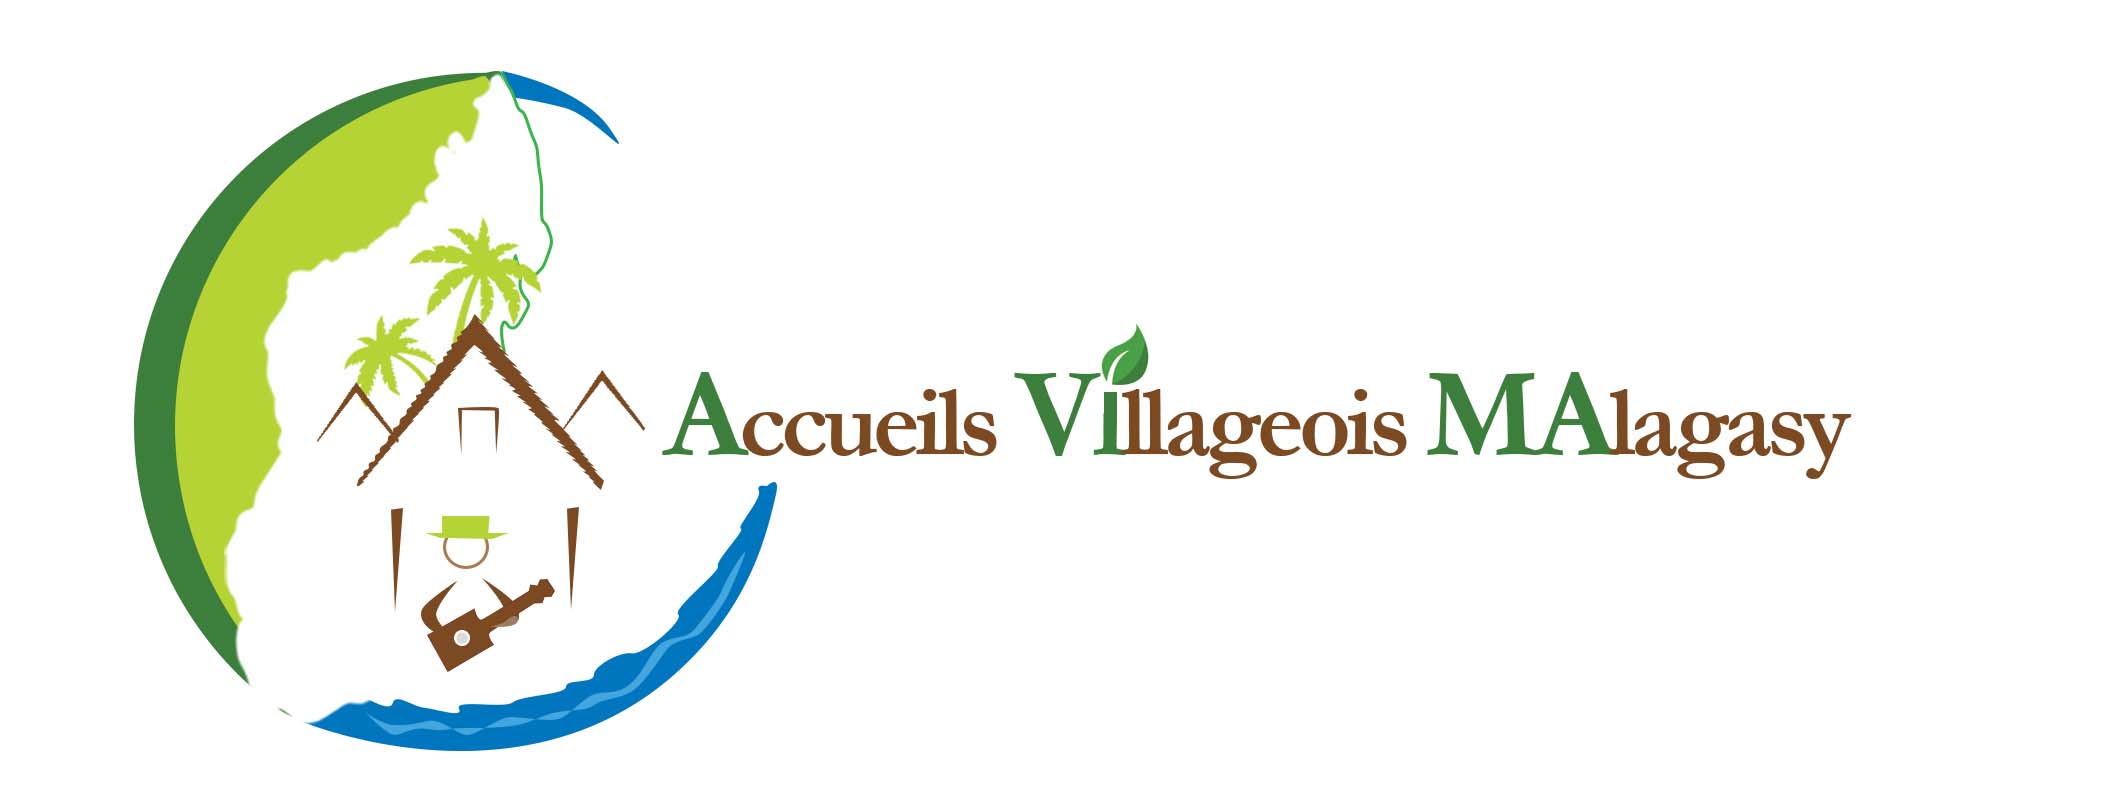 Accueil Villageois Antsirabe